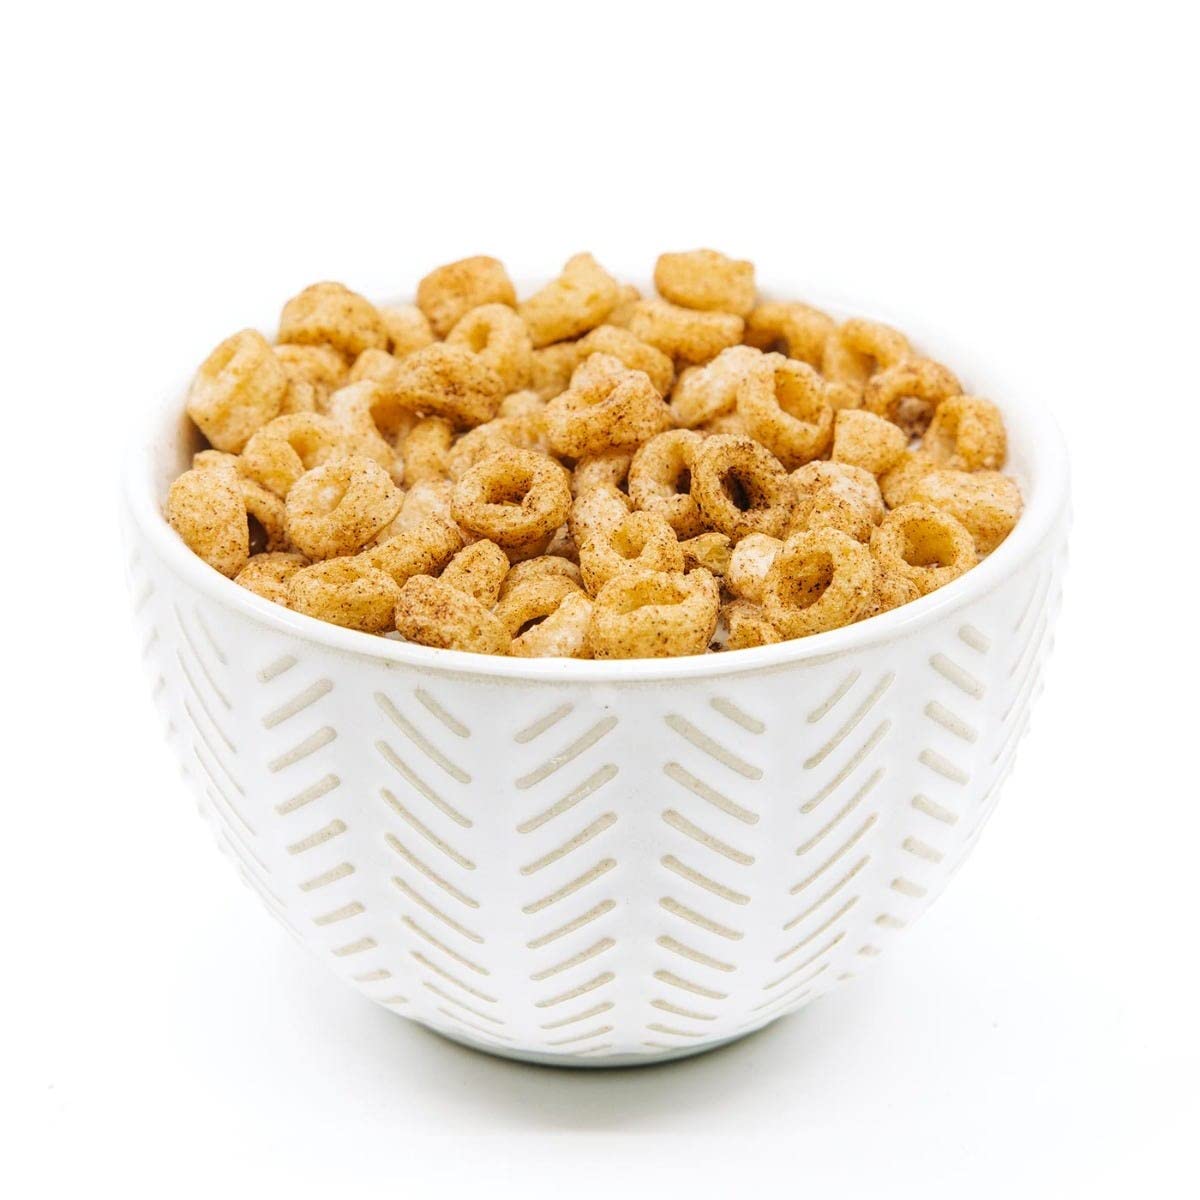 BariWise Protein Cereal, Cinnamon, Zero Sugar, Gluten Free, Keto Friendly & Low Carb (7ct)